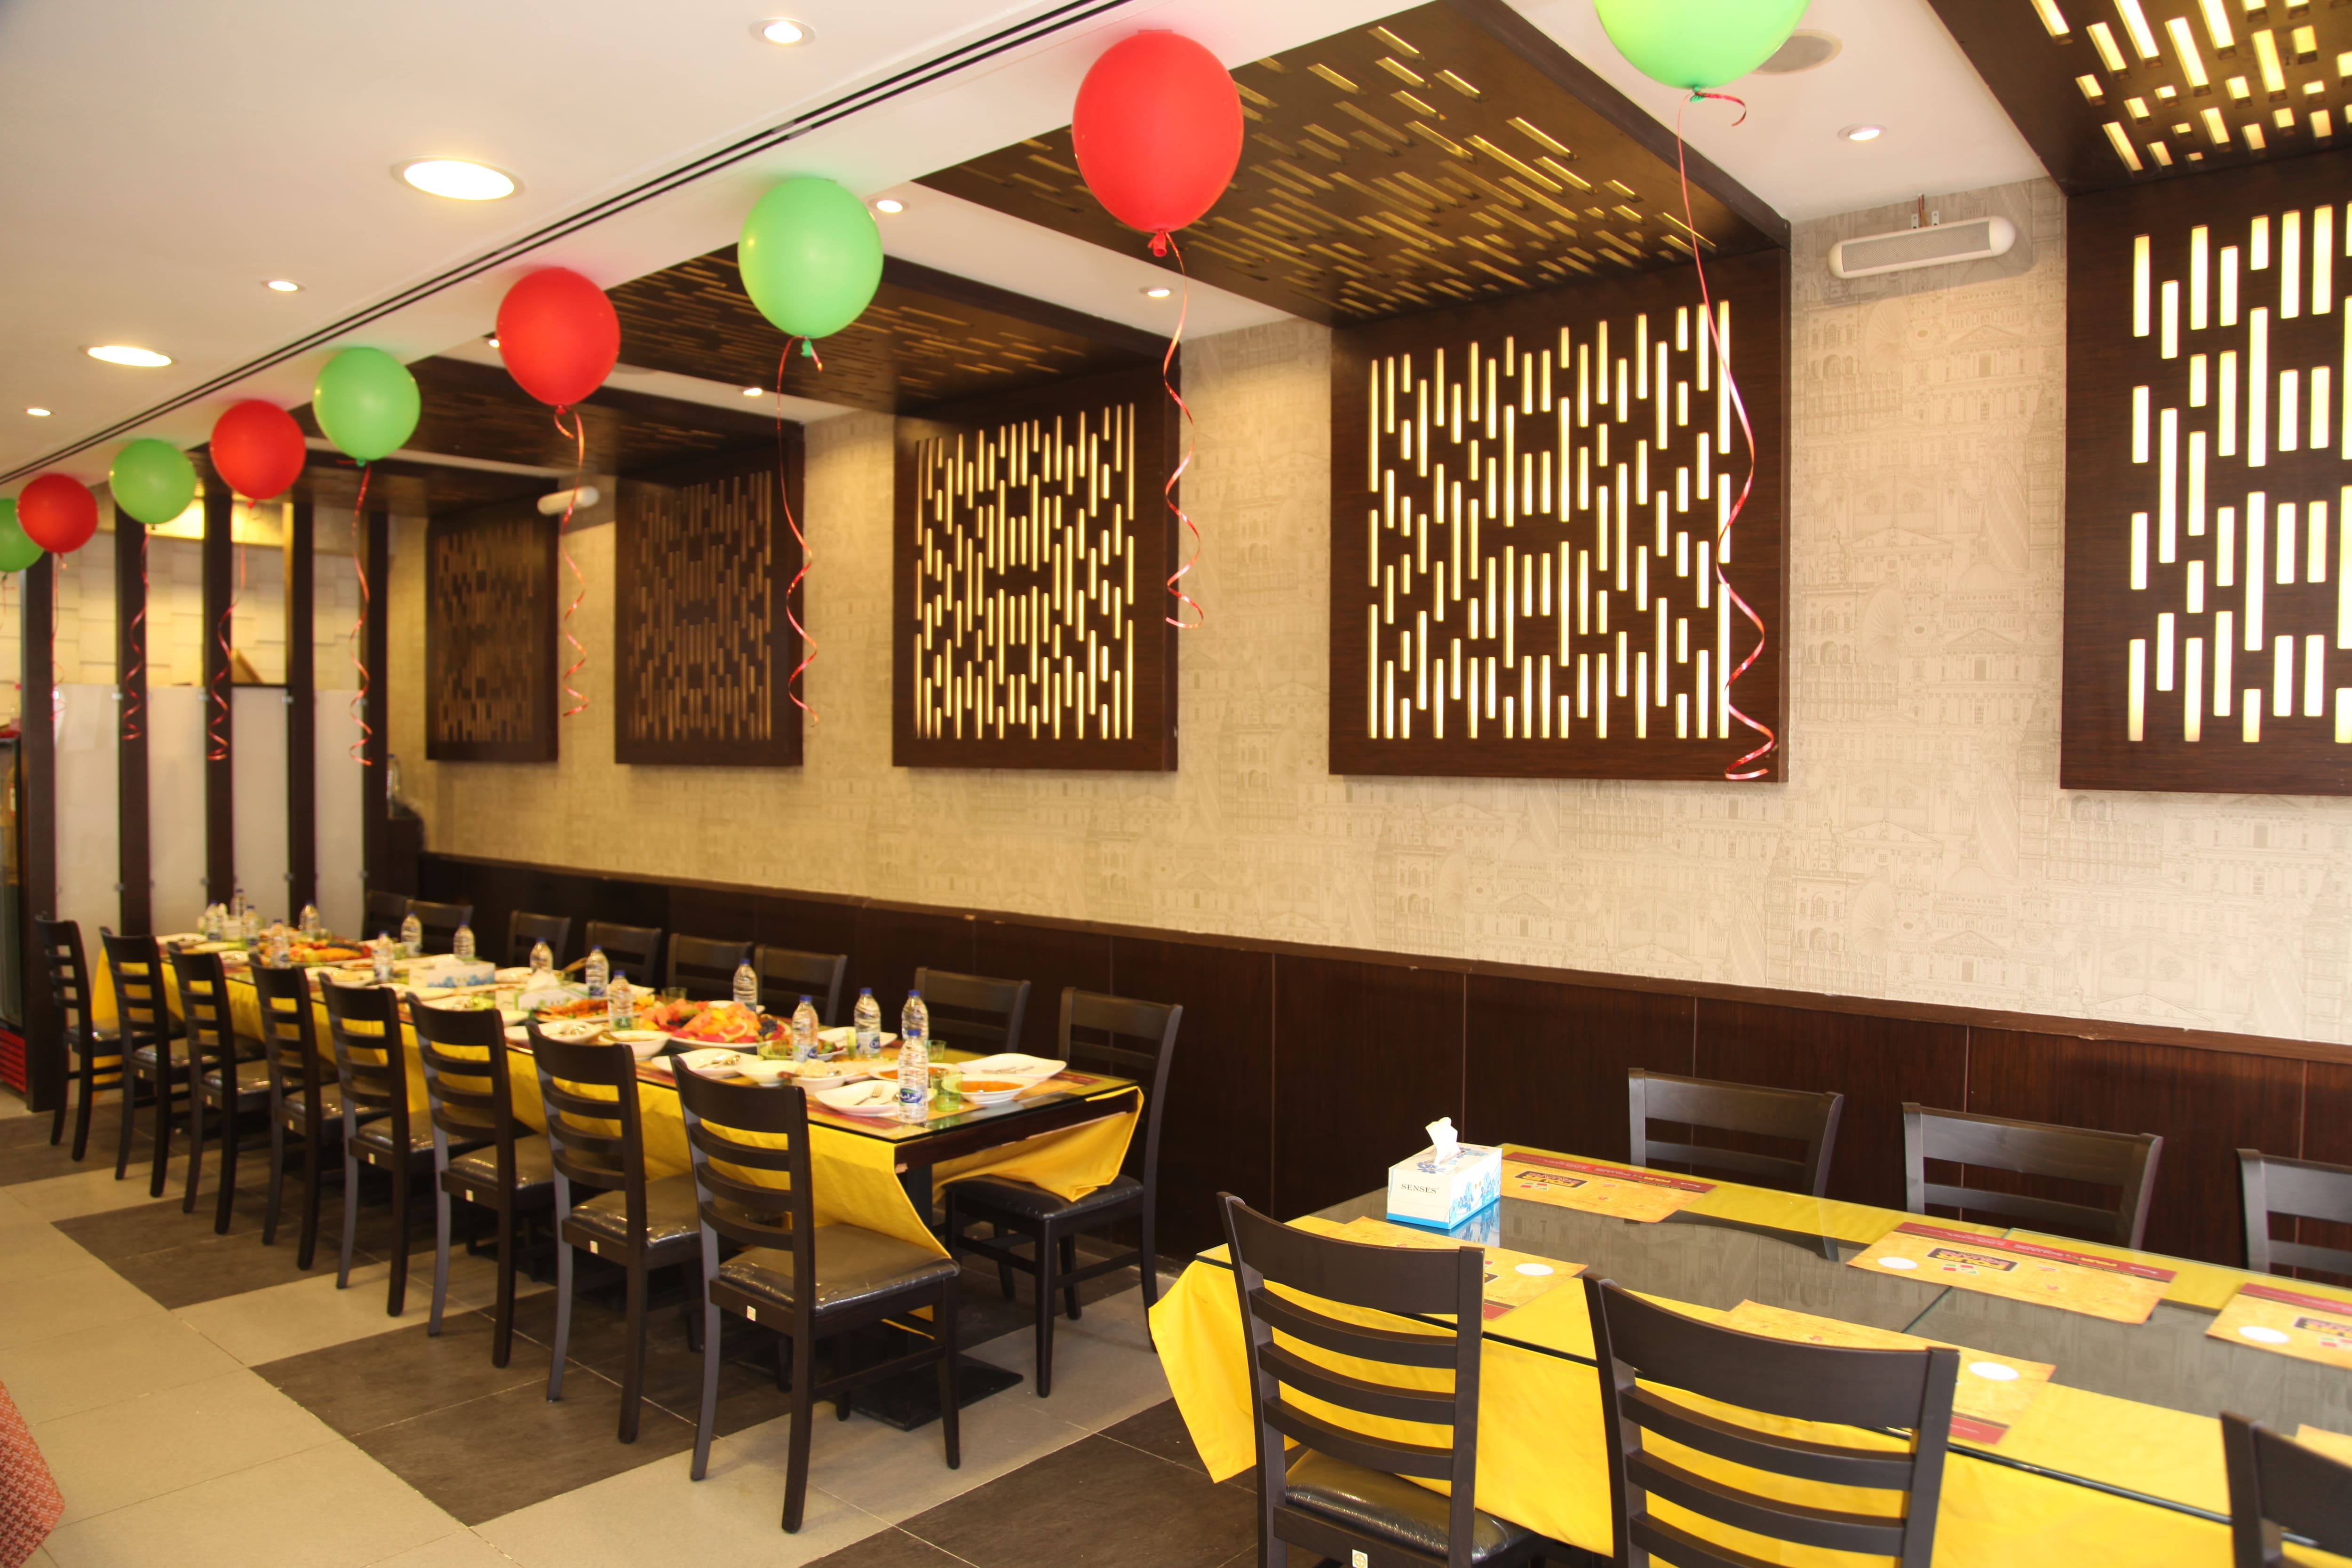 Four Square Cafe & Restaurant, Dubai Silicon Oasis (DSO), Dubai, , -  magicpin